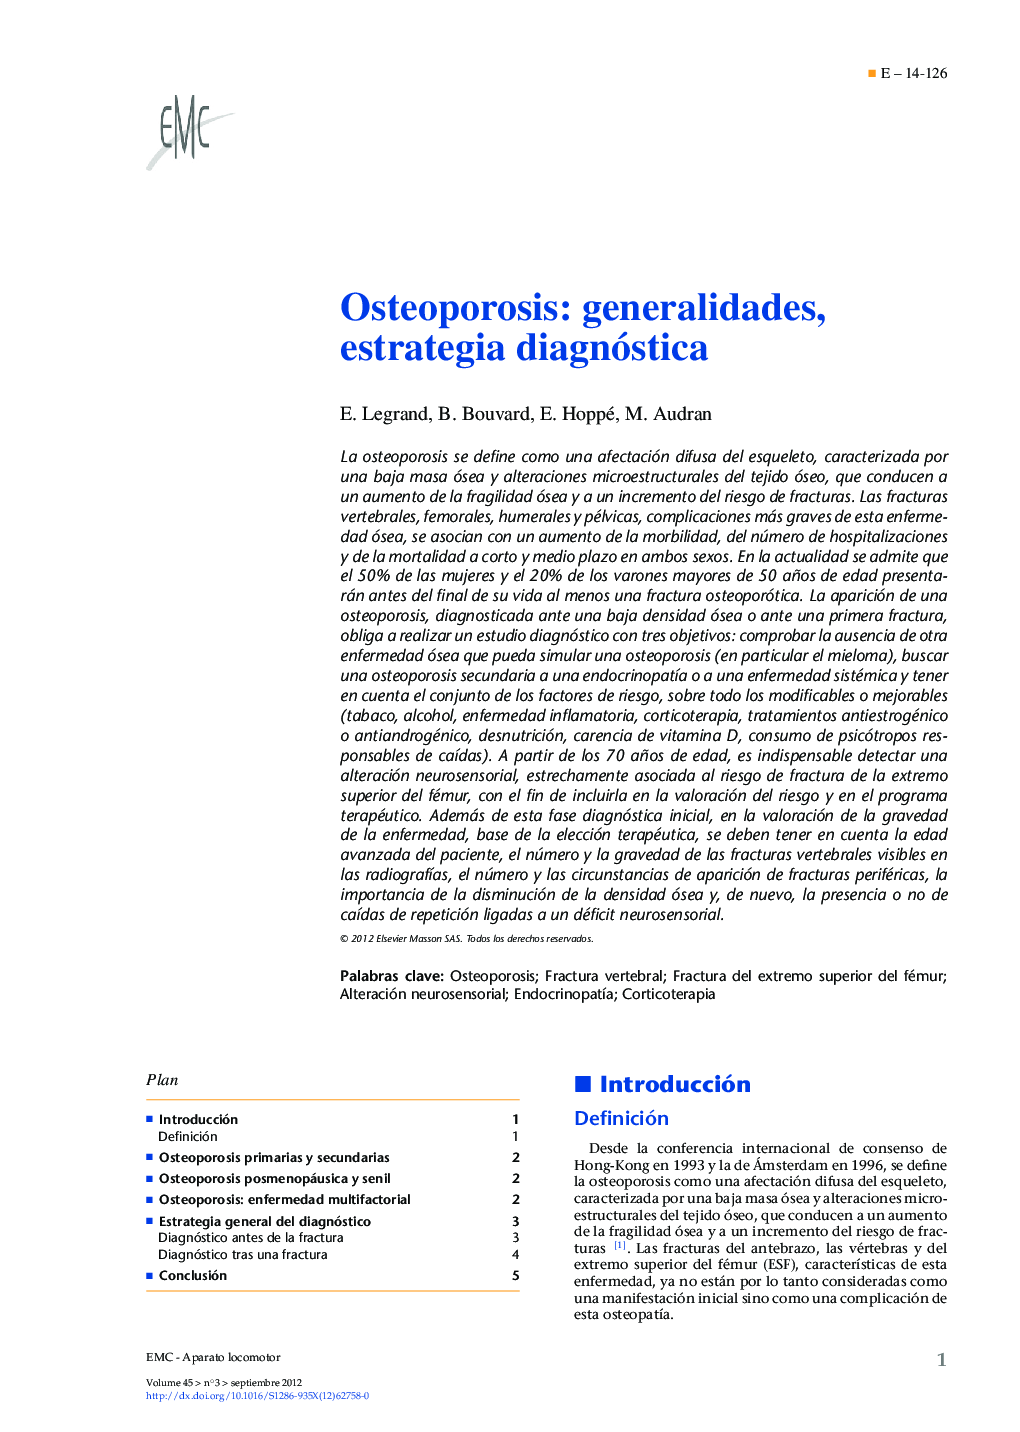 Osteoporosis: generalidades, estrategia diagnóstica